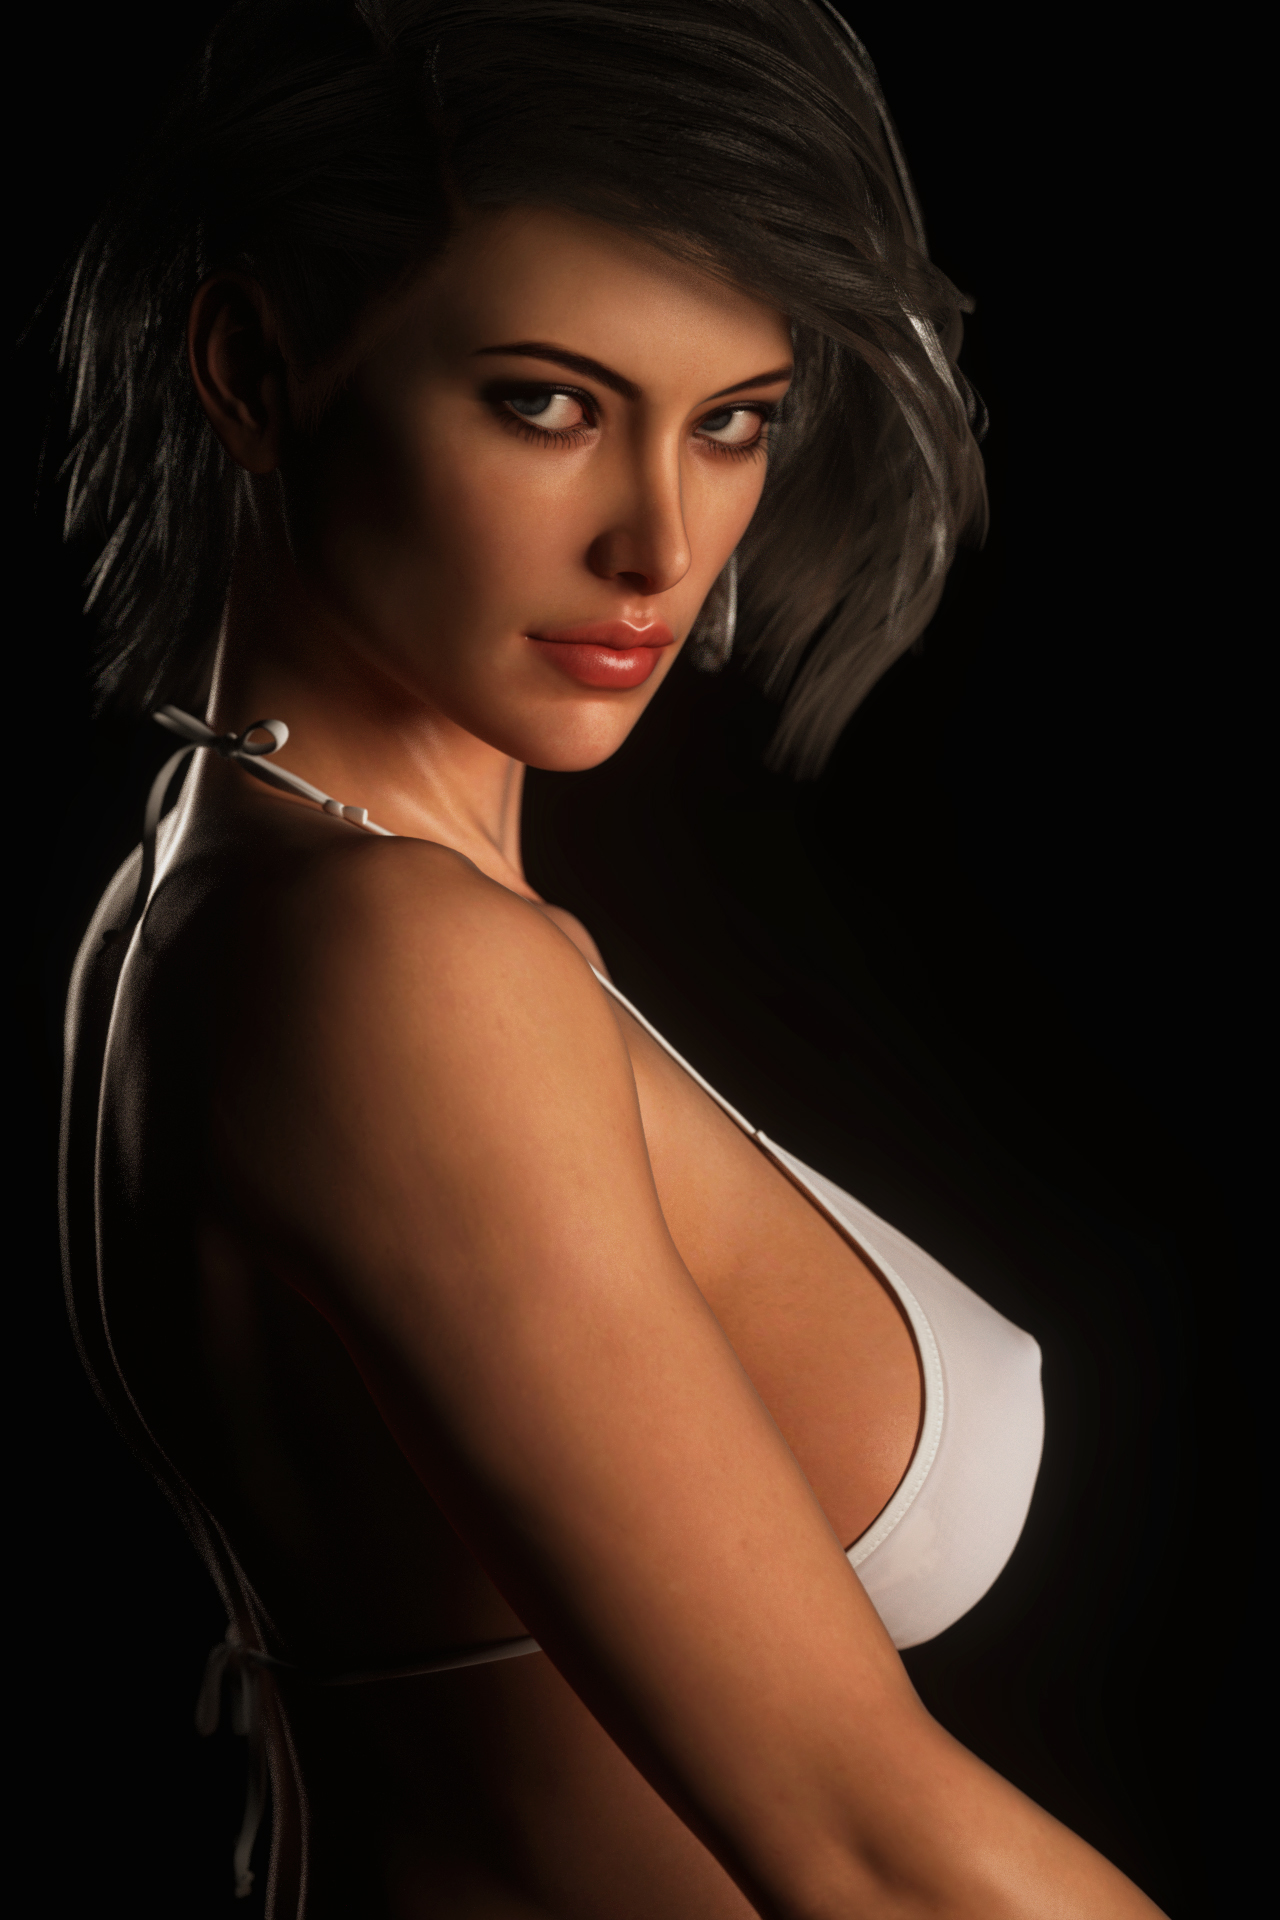 General 1280x1920 digital art women portrait display boobs bikini bikini top black background CGI brunette short hair